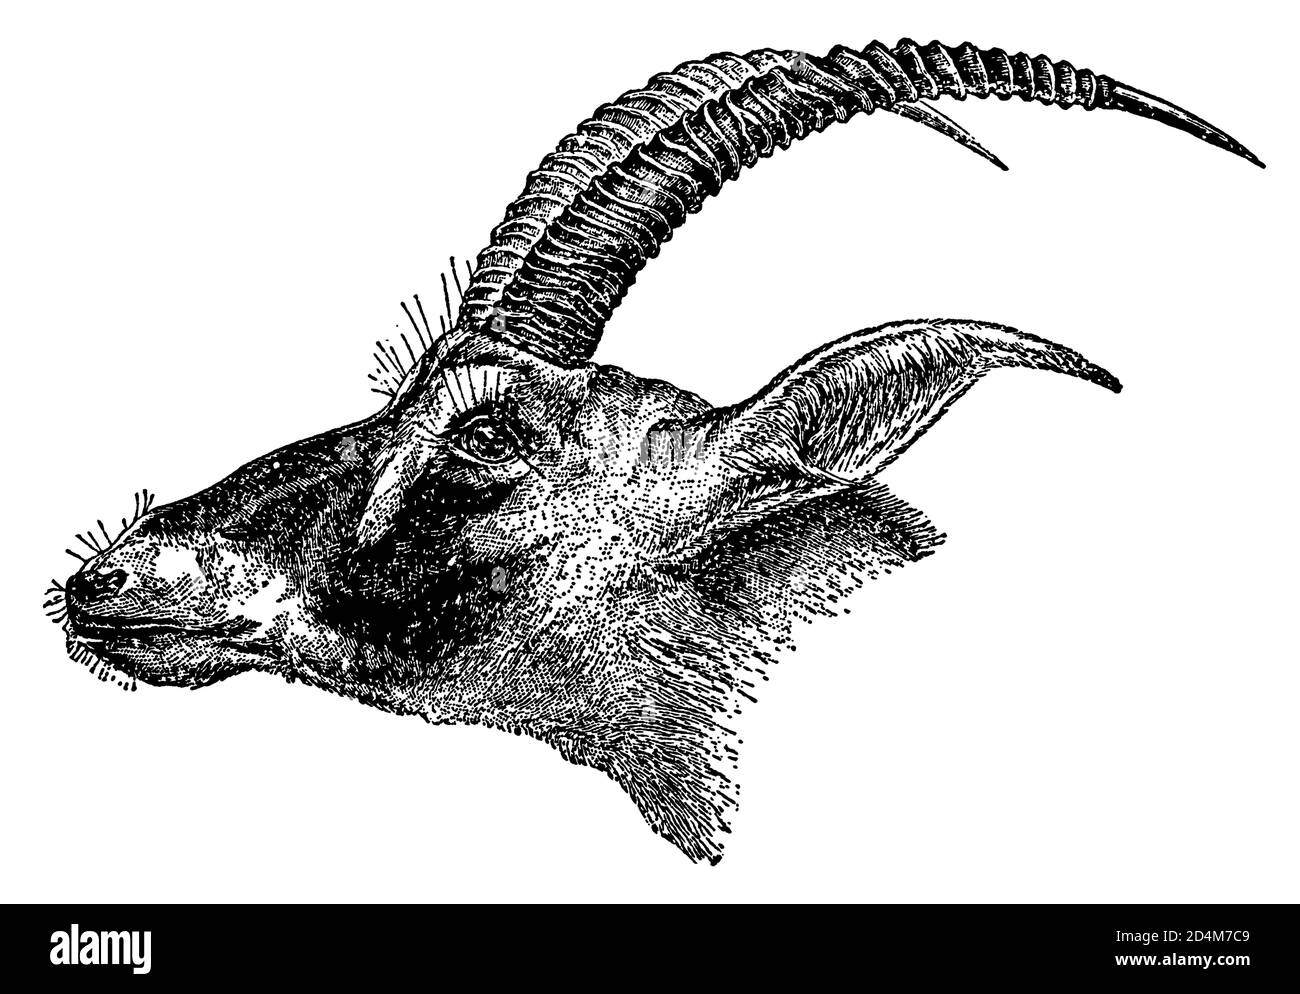 Antique engraving of a goat' head (isolated on white). Published in Systematischer Bilder-Atlas zum Conversations-Lexikon, Ikonographische Encyklopaed Stock Photo